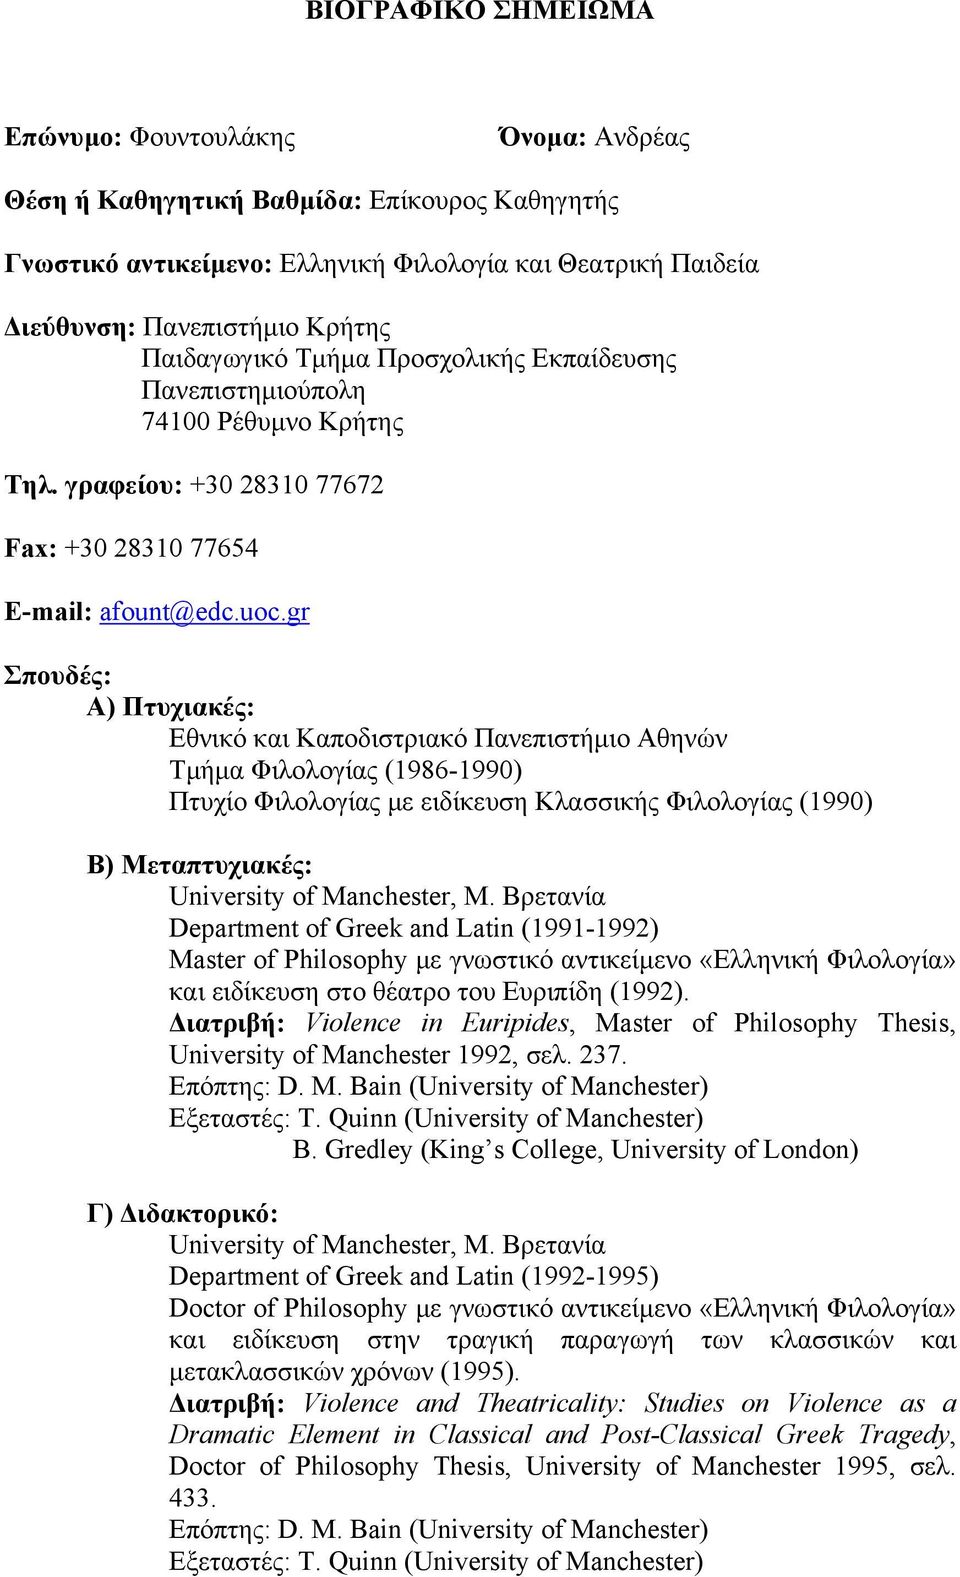 gr Σπουδές: Α) Πτυχιακές: Εθνικό και Καποδιστριακό Πανεπιστήμιο Αθηνών Τμήμα Φιλολογίας (1986-1990) Πτυχίο Φιλολογίας με ειδίκευση Κλασσικής Φιλολογίας (1990) Β) Μεταπτυχιακές: University of